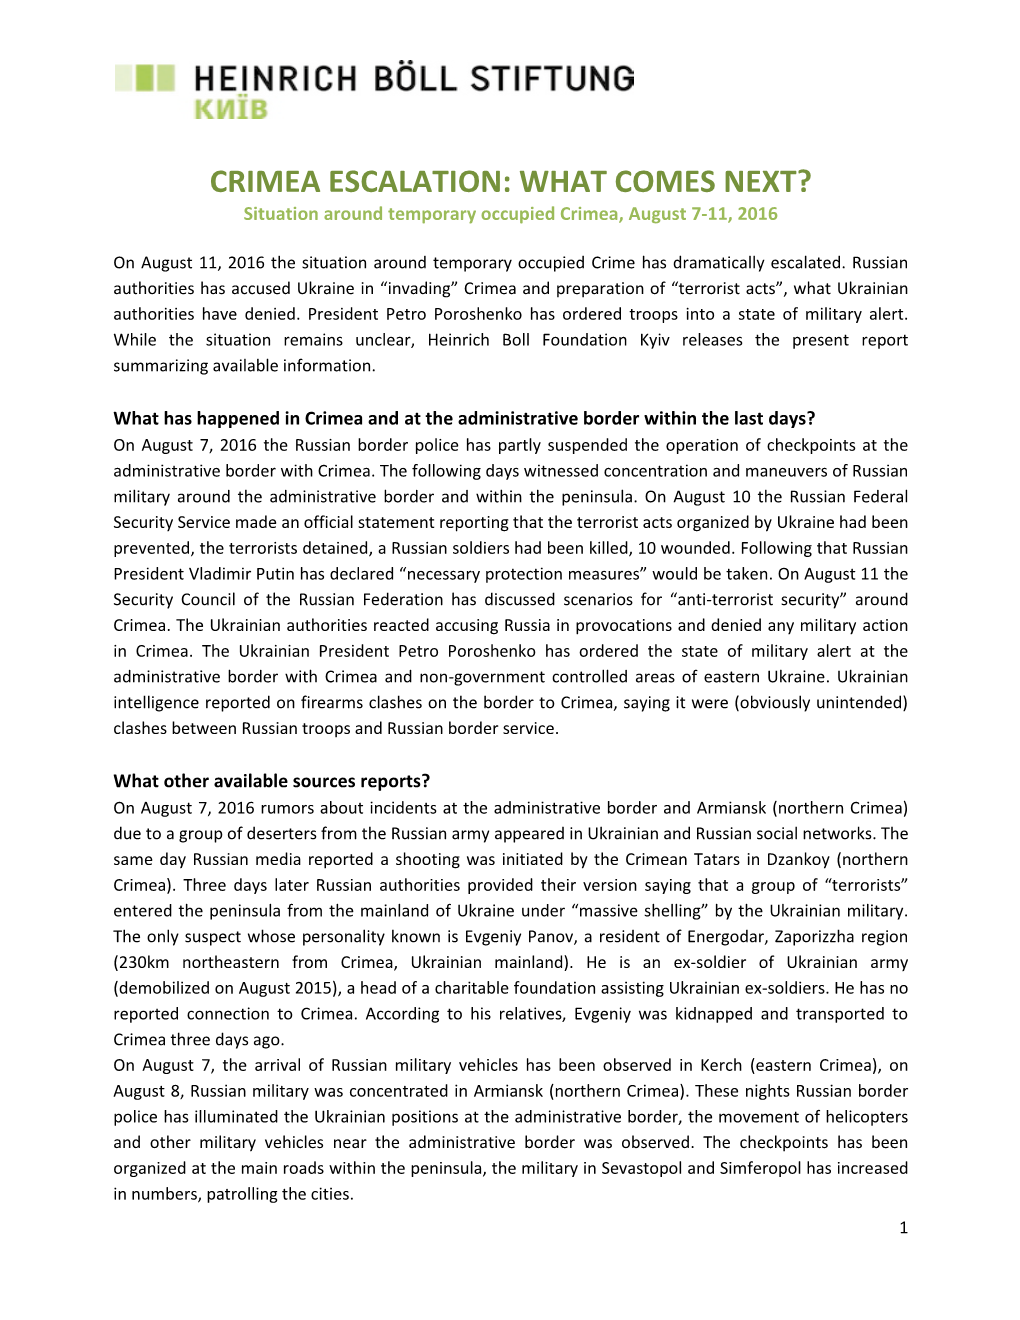 CRIMEA ESCALATION: WHAT COMES NEXT? Situation Around Temporary Occupied Crimea, August 7-11, 2016